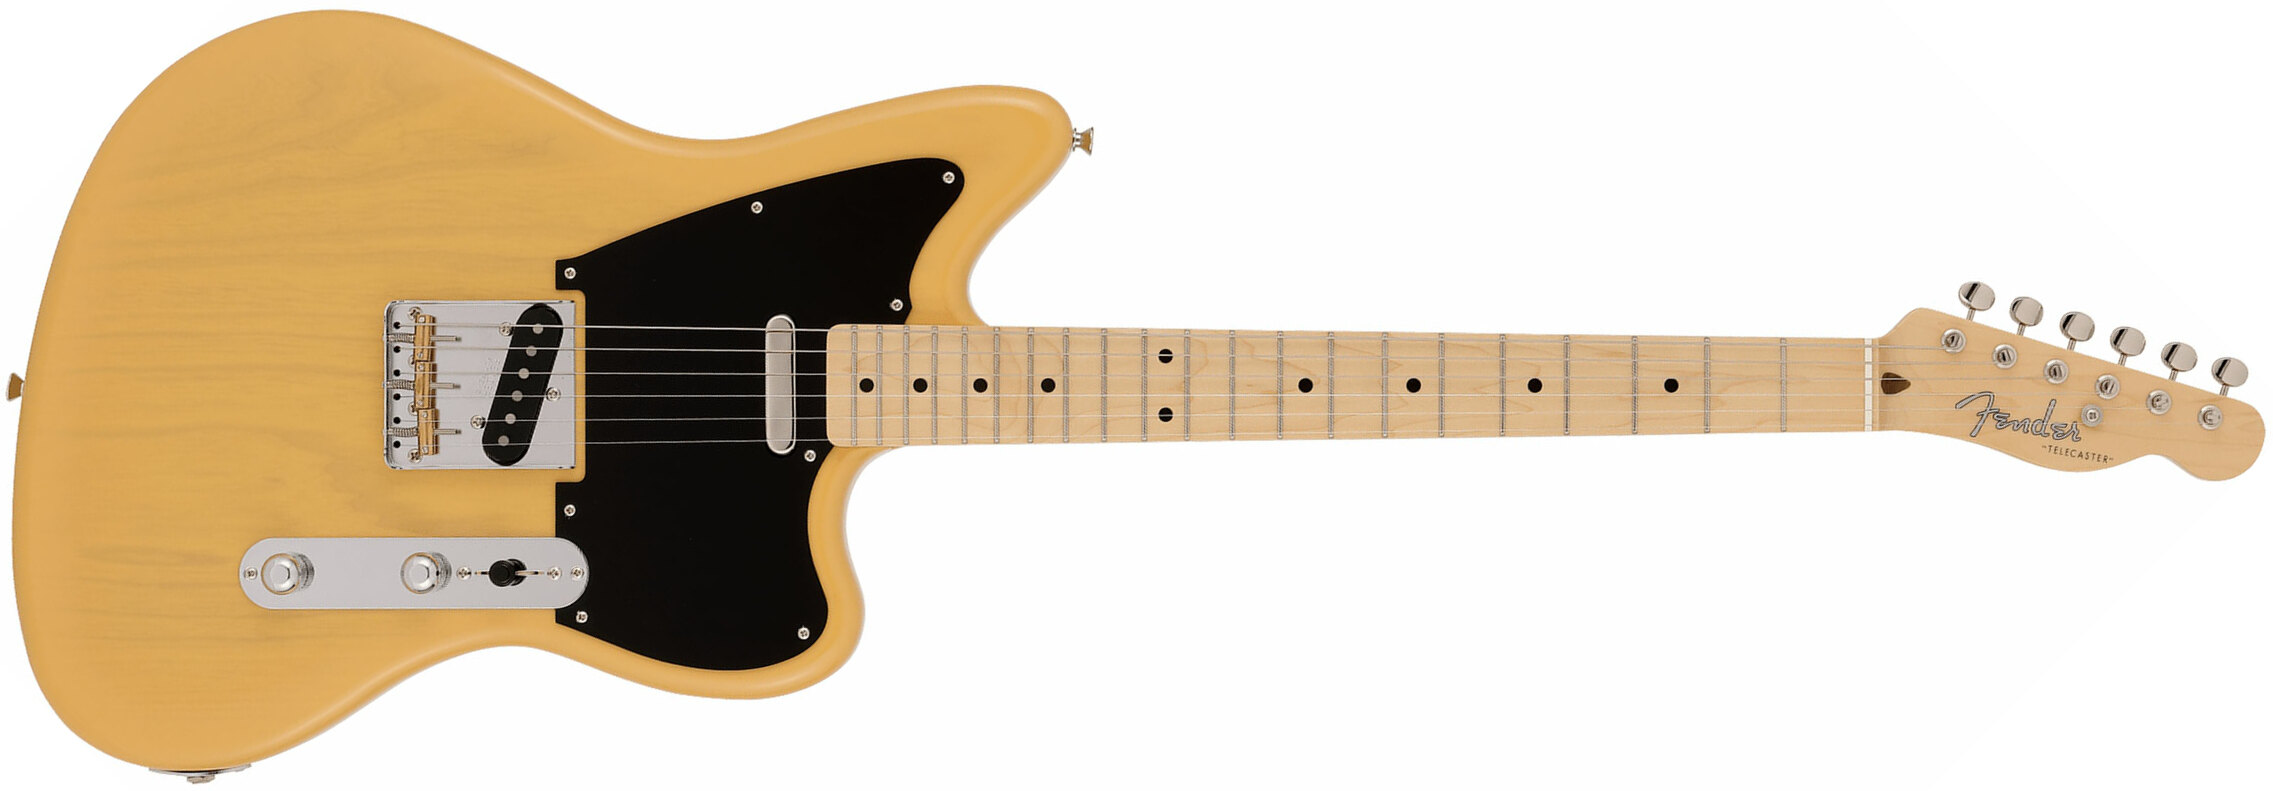 Fender Tele Offset Ltd Jap 2s Ht Mn - Butterscotch Blonde - Guitarra electrica retro rock - Main picture